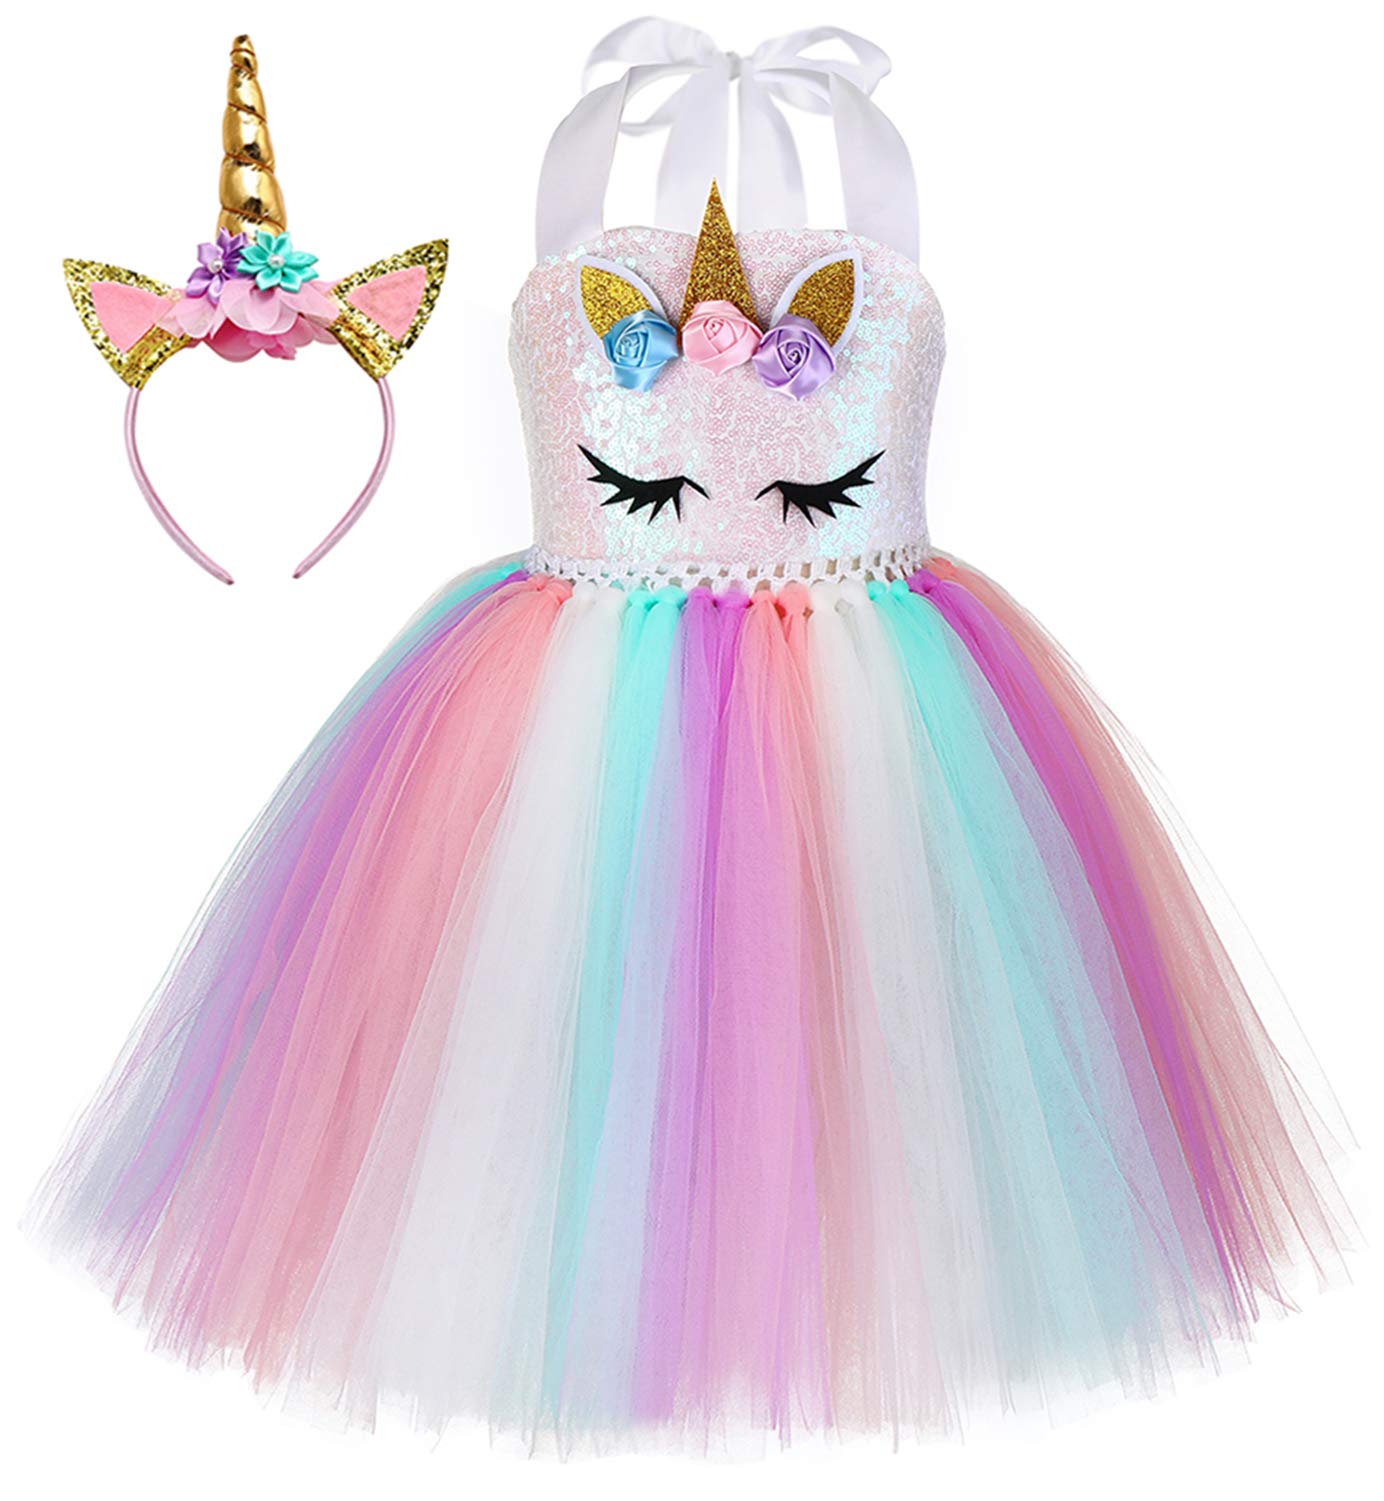 Tutu Dreams Handmade Sequin Unicorn Dress for Girls 1-10Y with Headband Birthday Dance Party Dresses